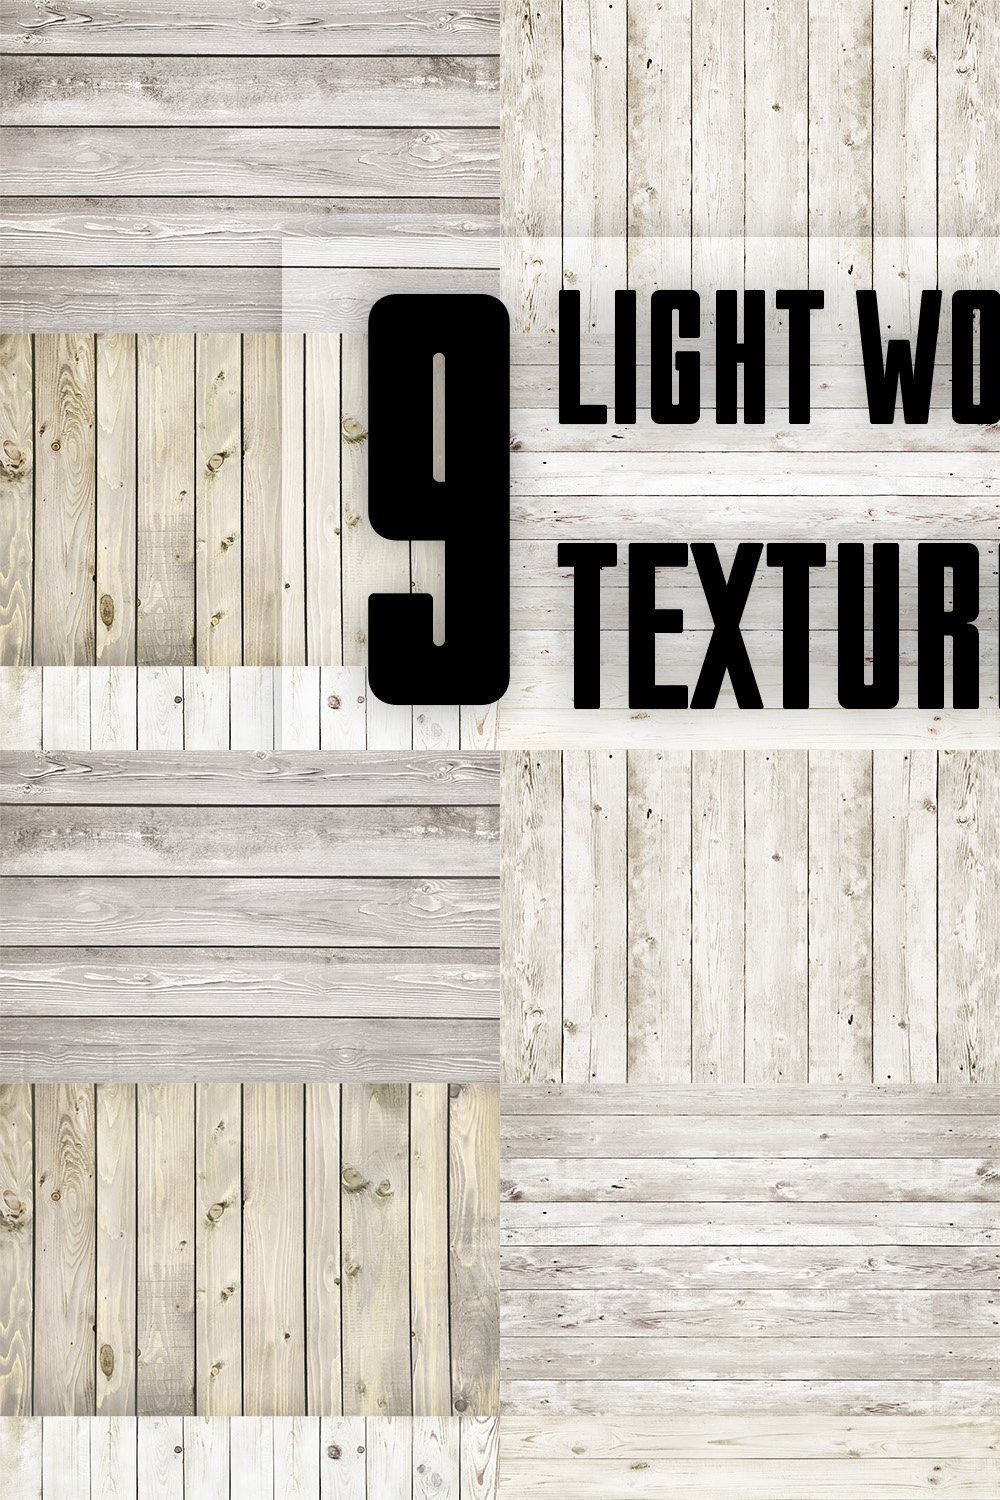 Light wood textures pinterest preview image.